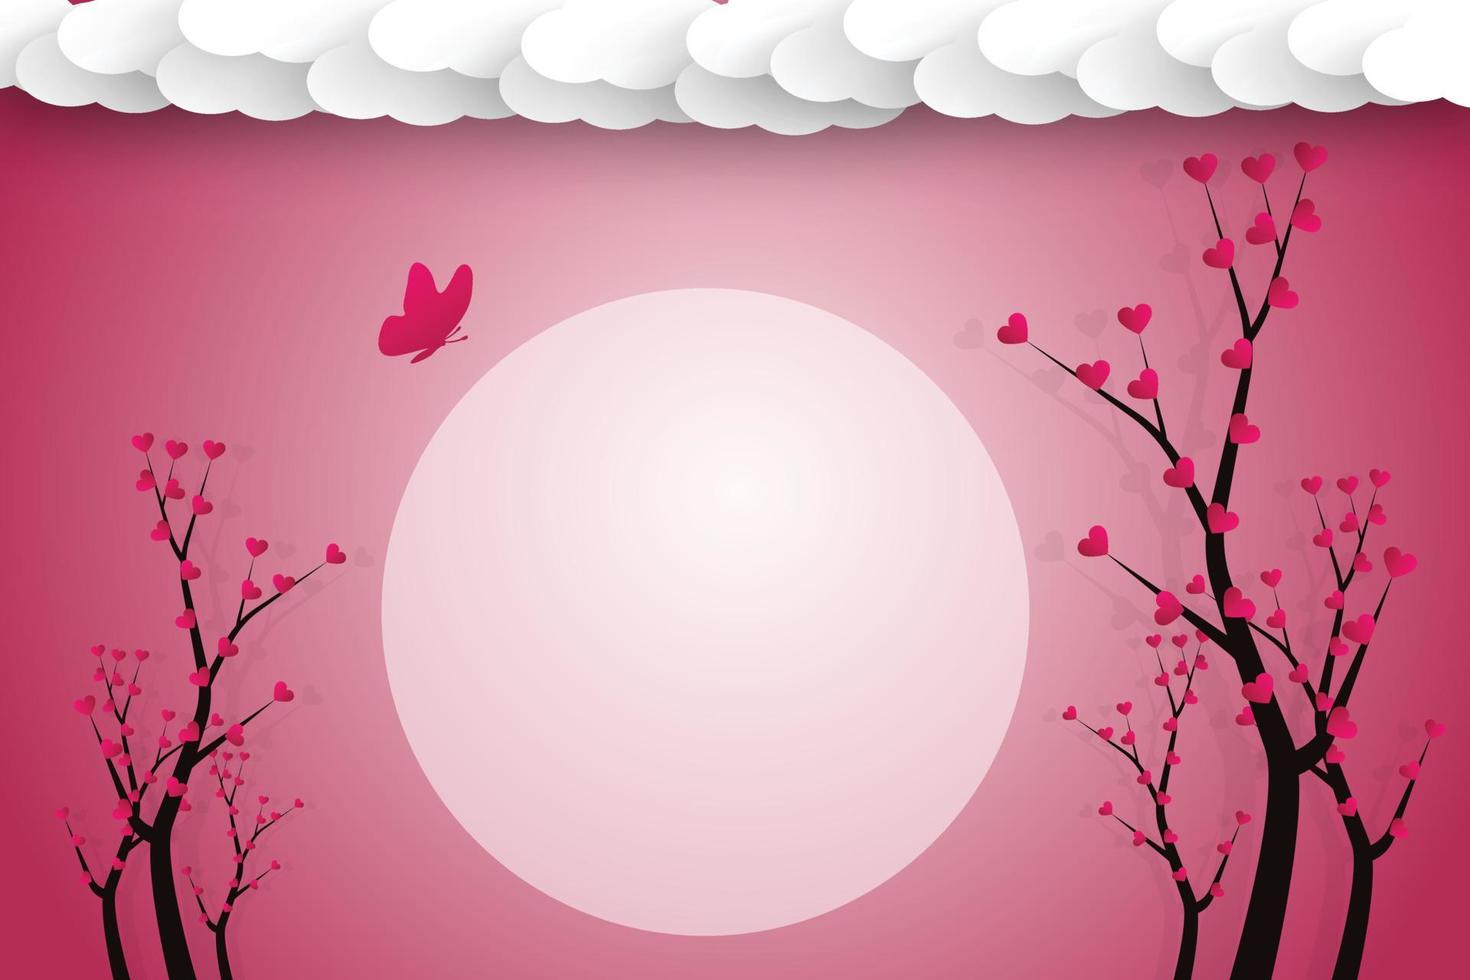 fondo feliz día de san valentín con árbol de amor. ilustración del día de san valentín con un árbol de amor de corazón sobre un fondo rosa. vector